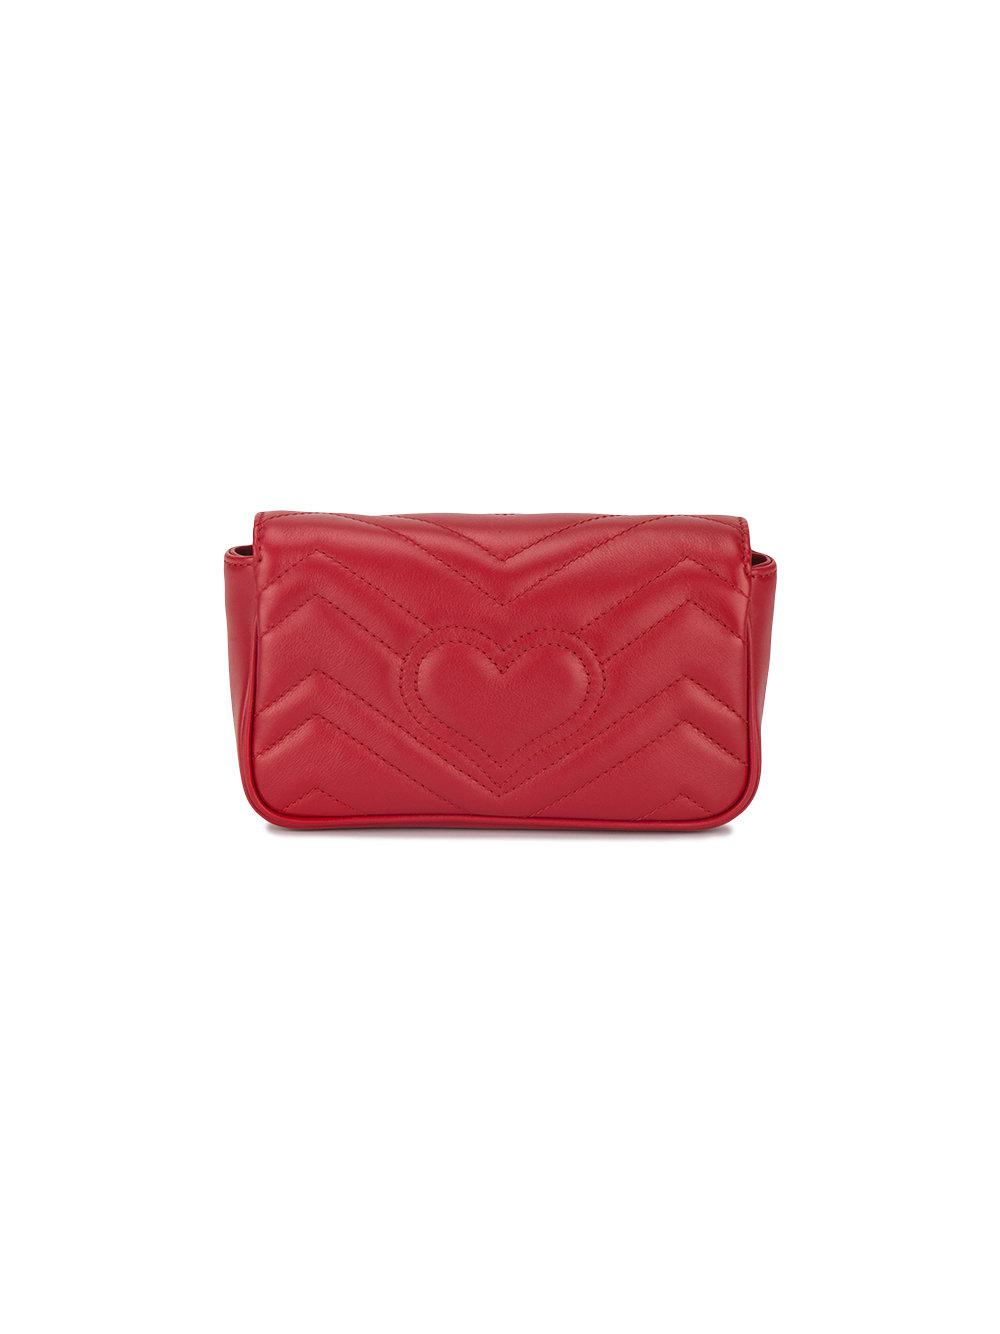 Gucci Super Mini Marmont Matelassé Bag in Red - Lyst